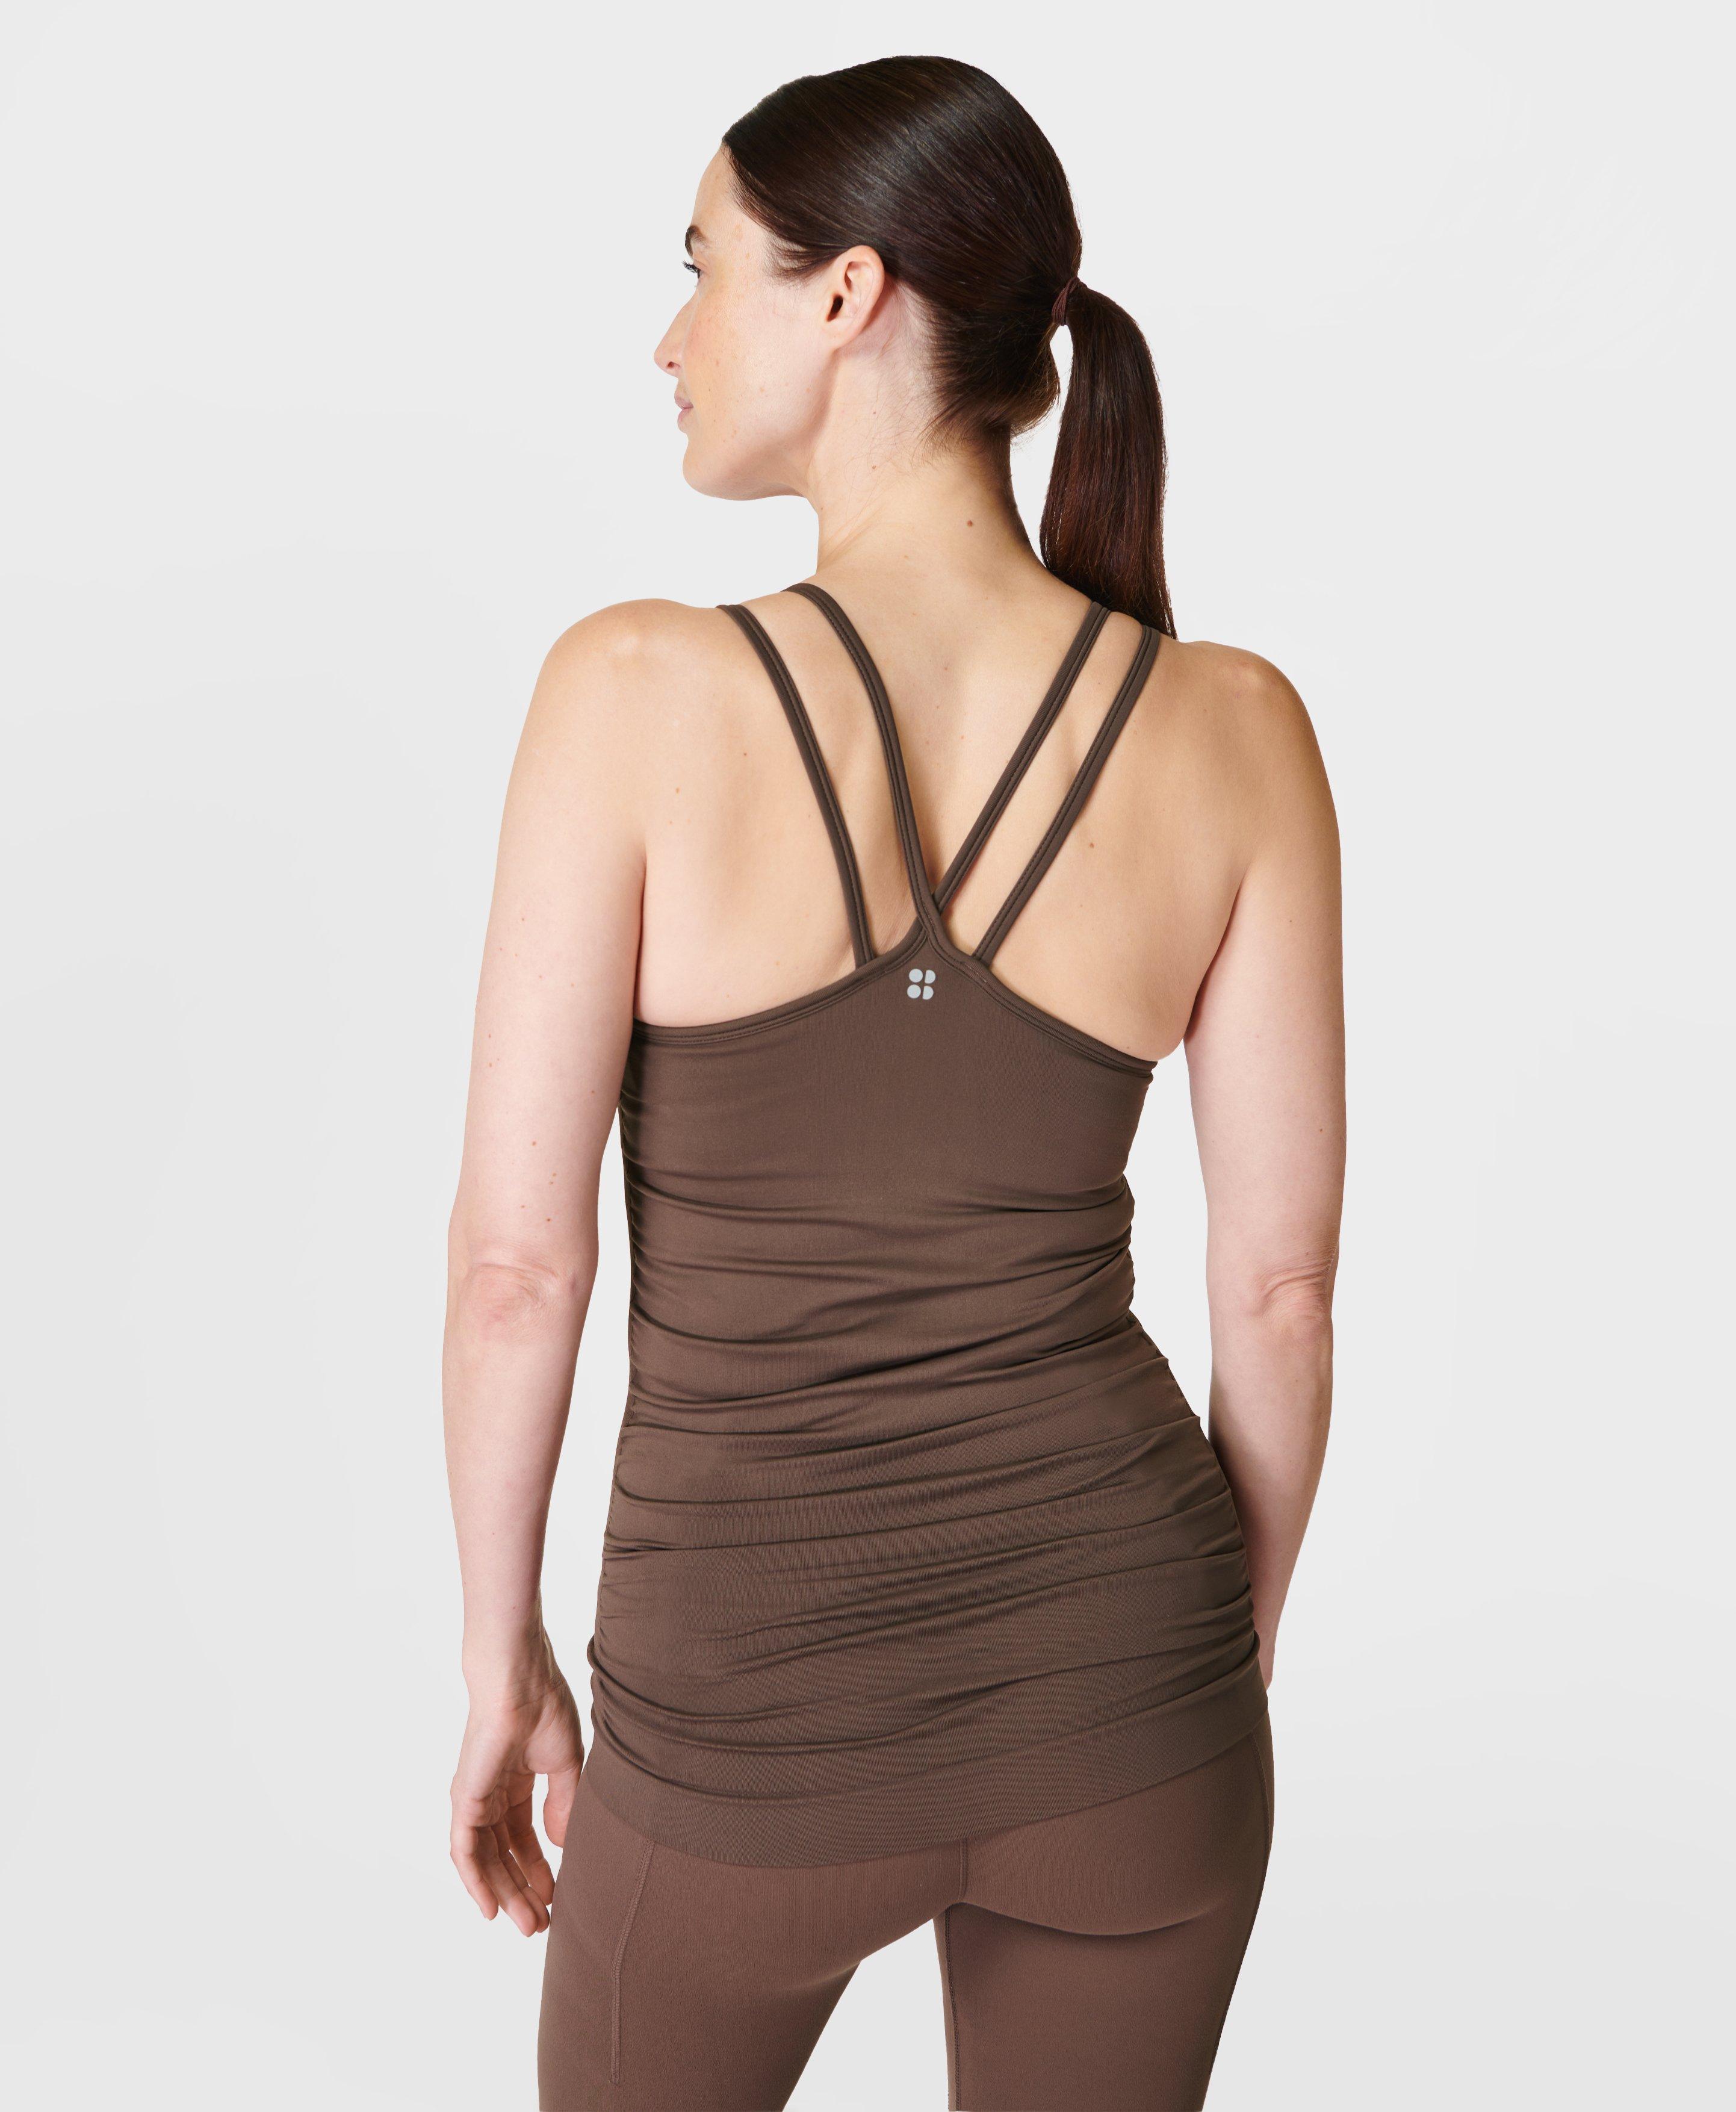 Poise Seamless Yoga Vest - Walnut Brown, Women's Vests